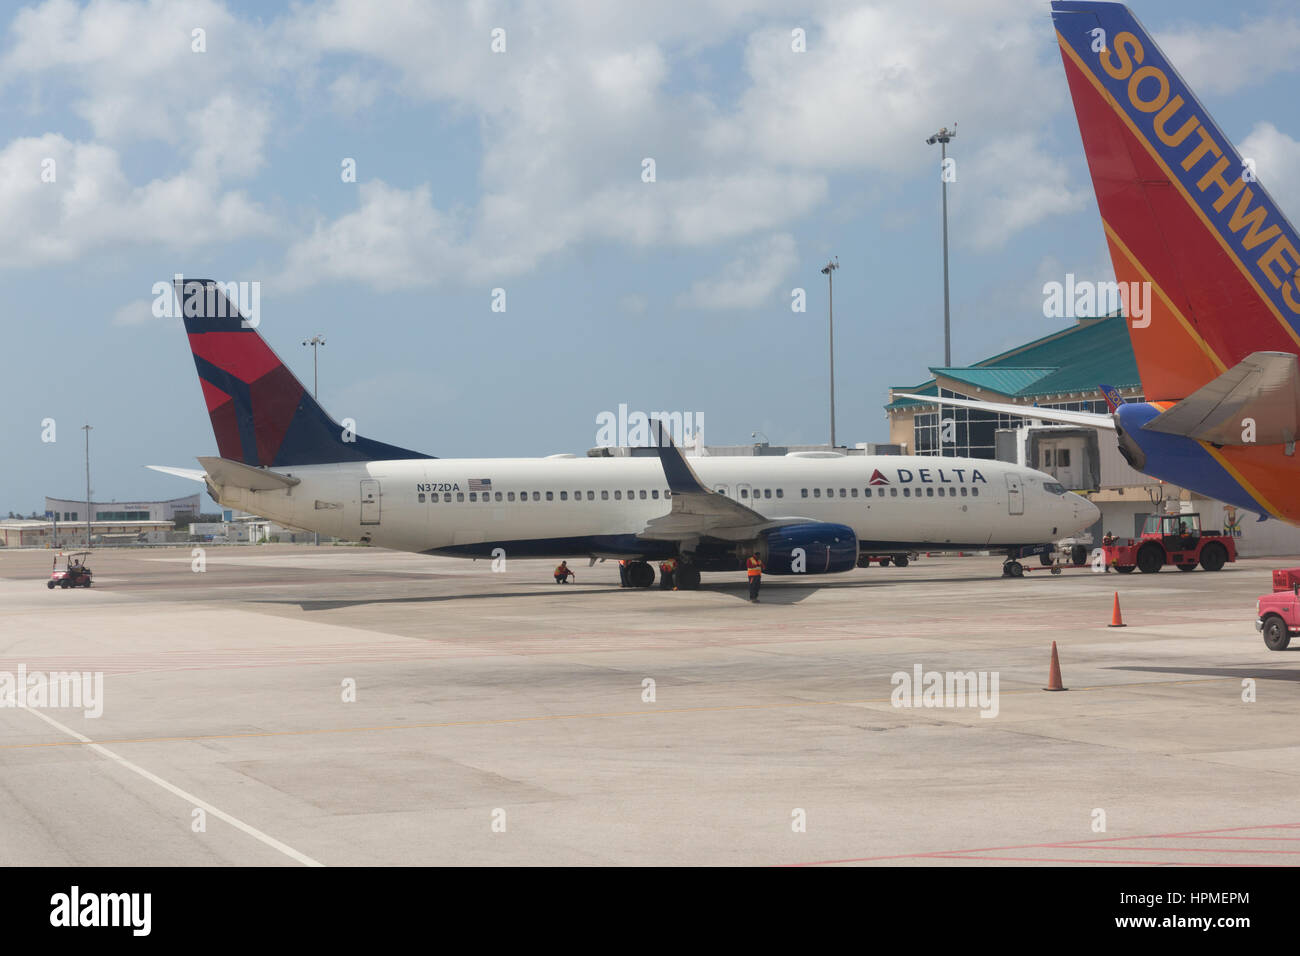 Delta Airlines plane at Aruba International airport Stock Photo